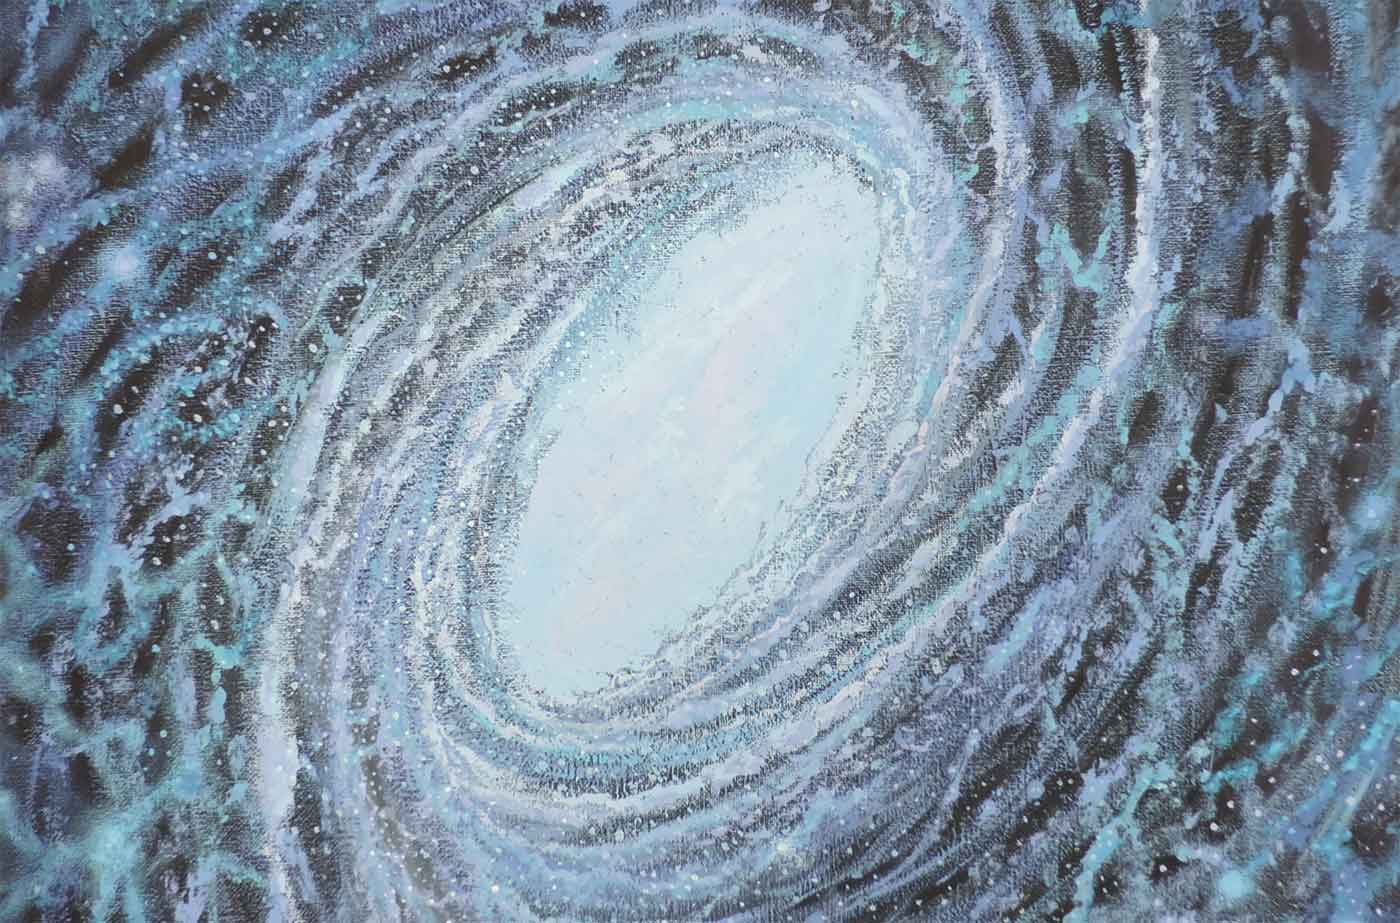 Spiral Galaxy gouache painting.